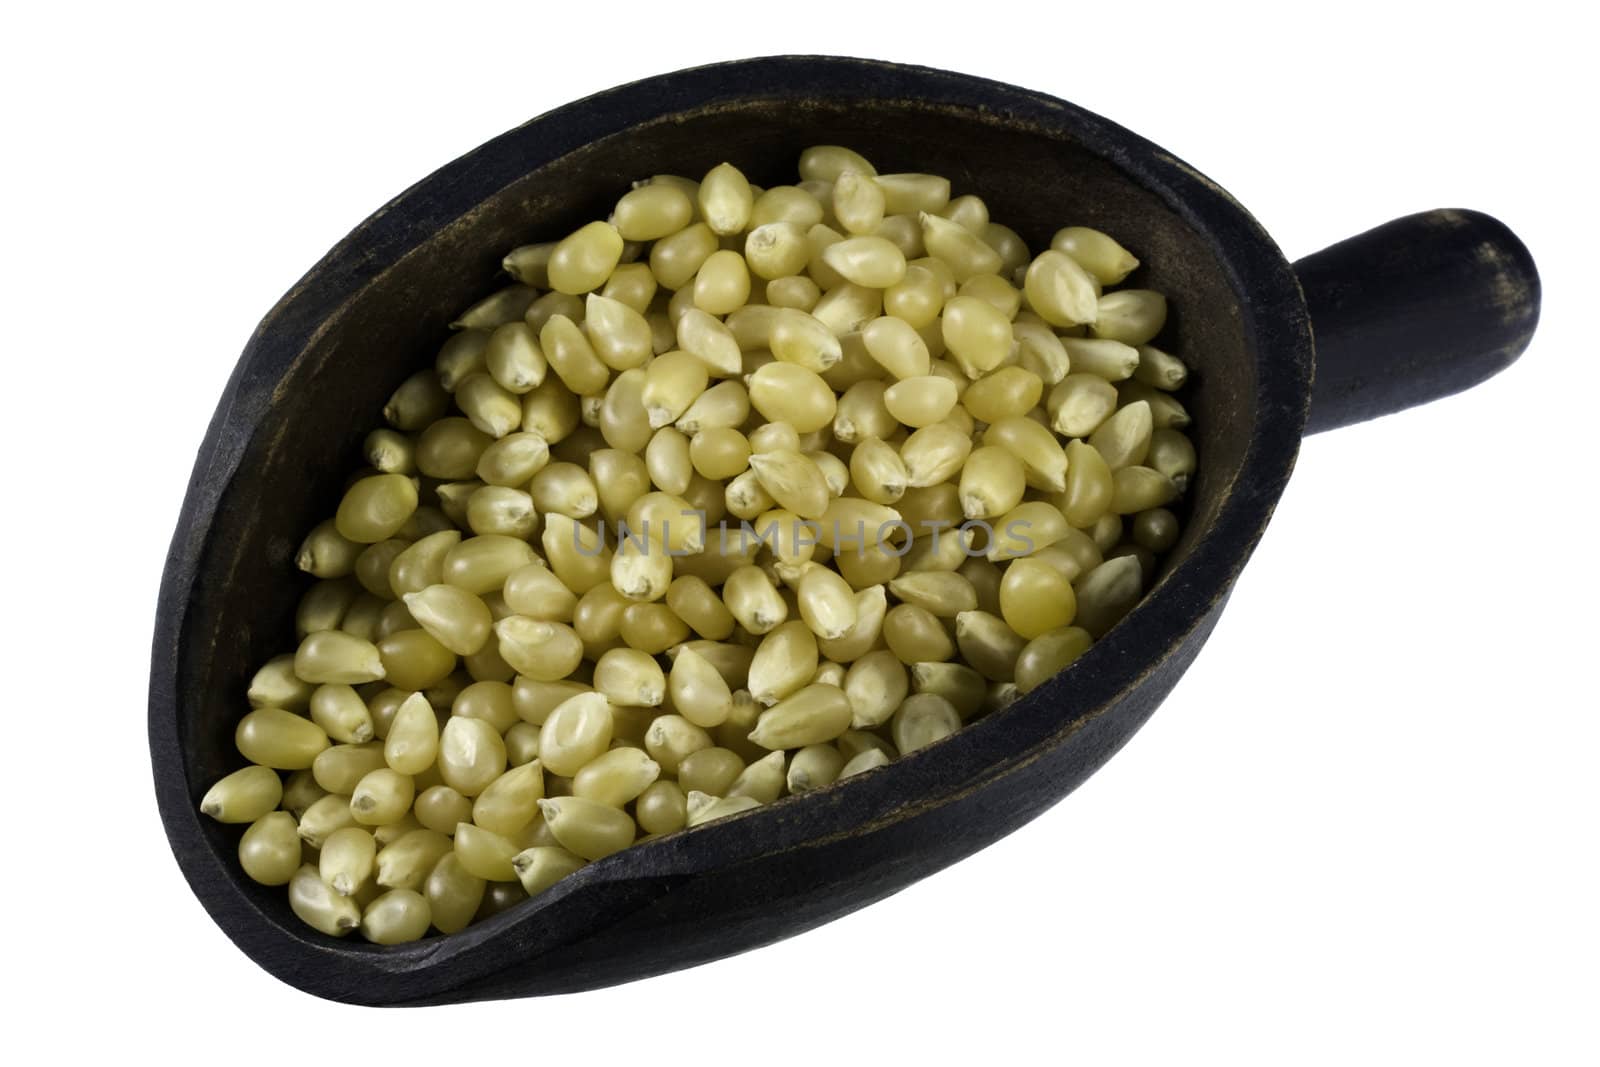 scoop of corn kernels by PixelsAway